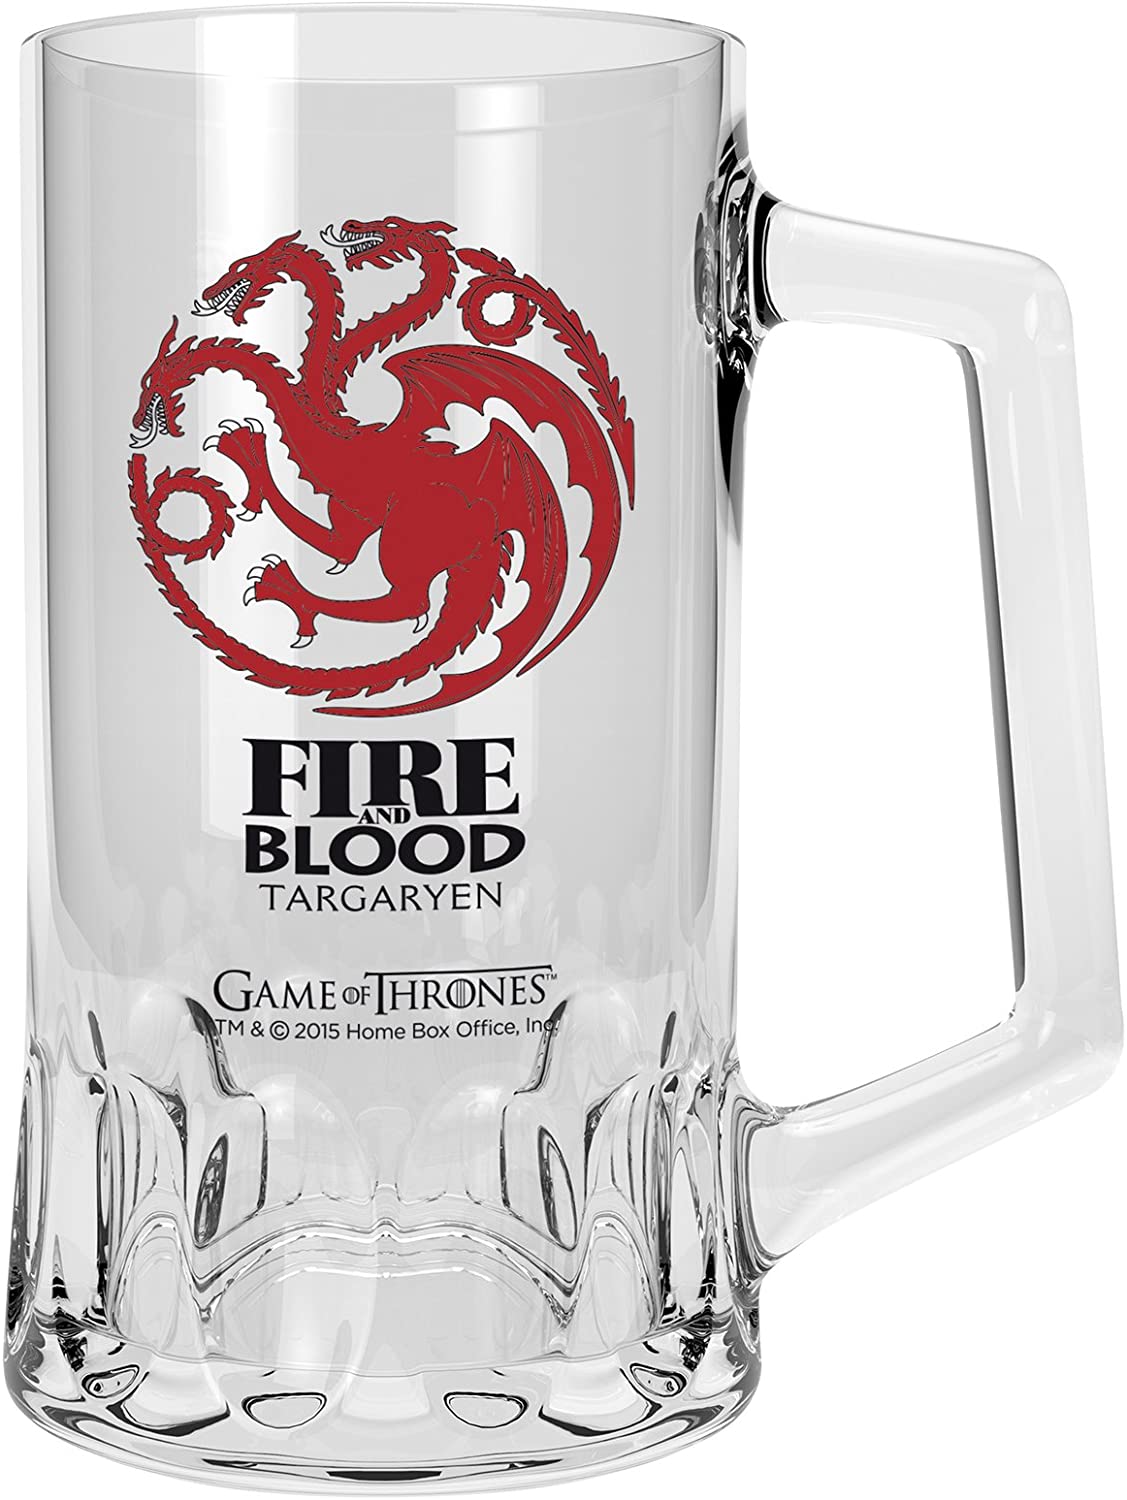 § Game of Thrones - Targaryen Beer Glass